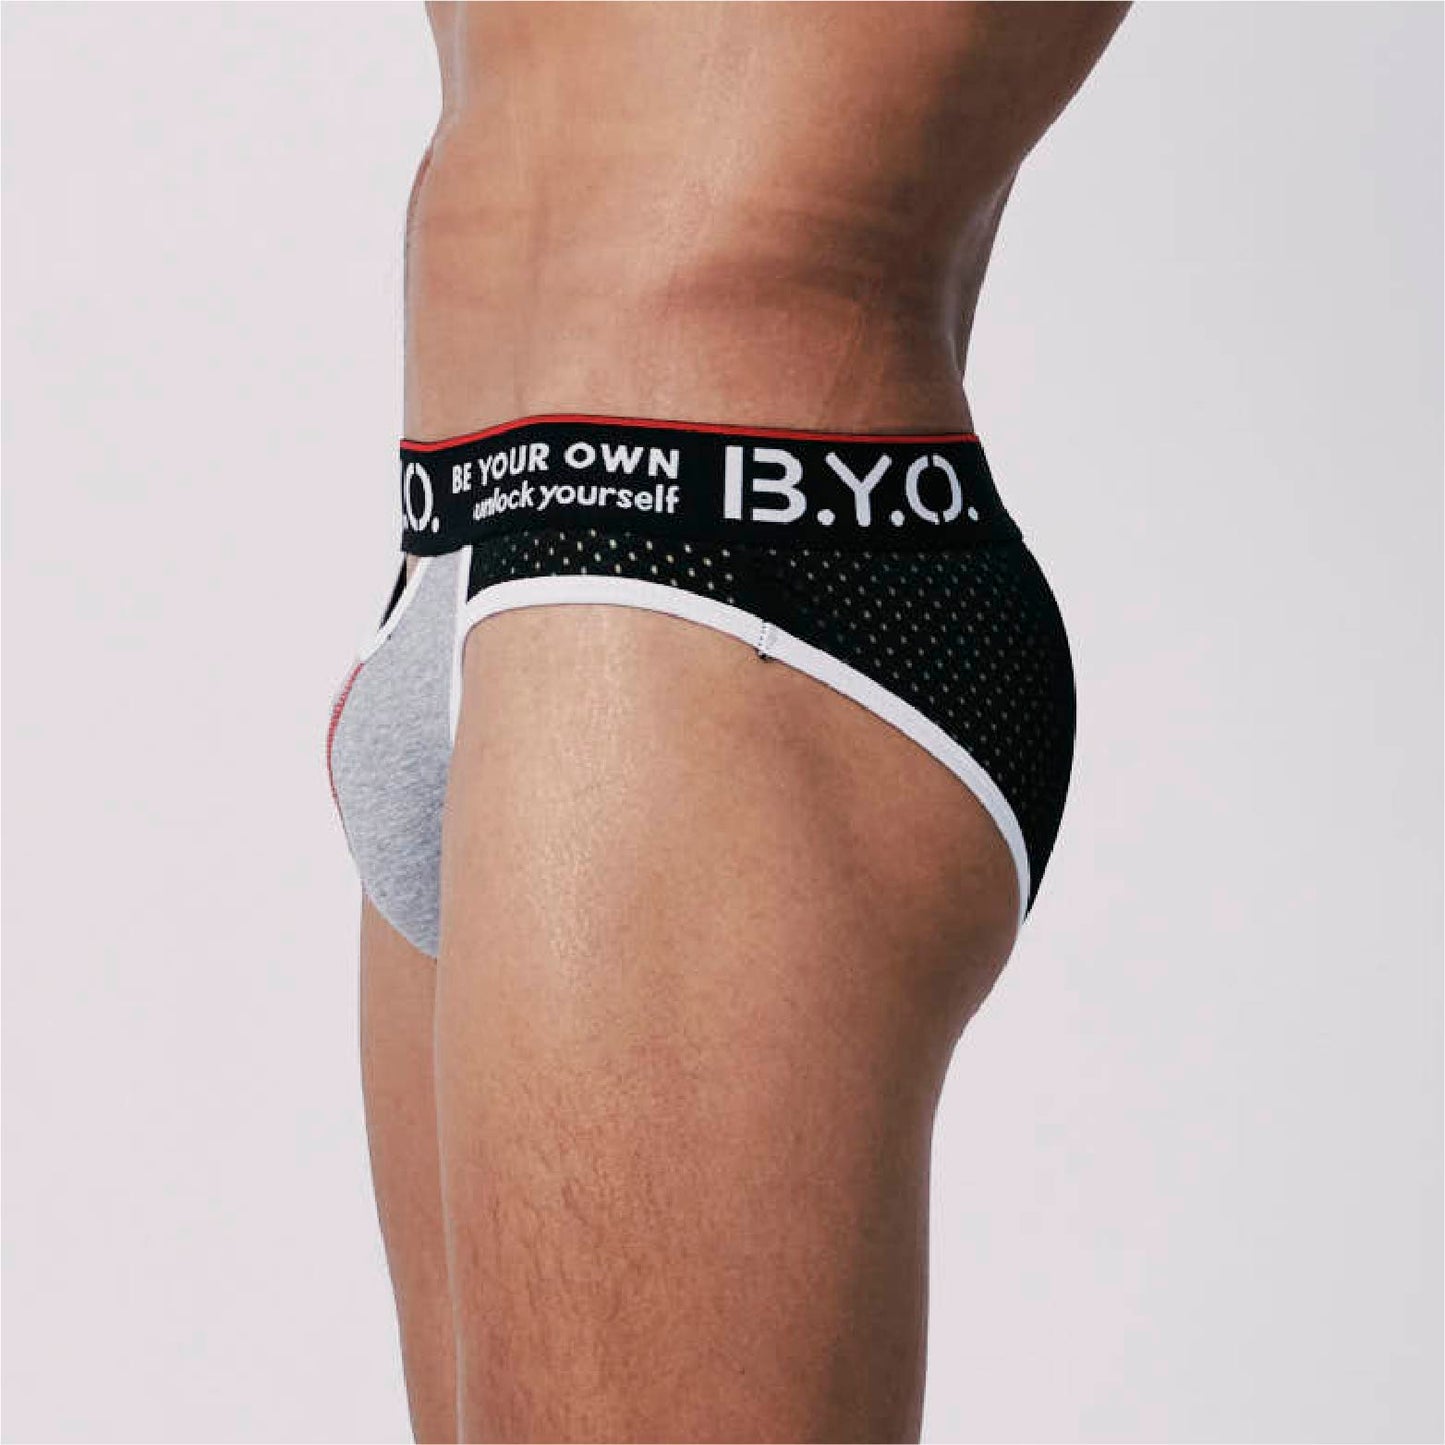 B.Y.O.BeYourOwn-極致性感組(7入)